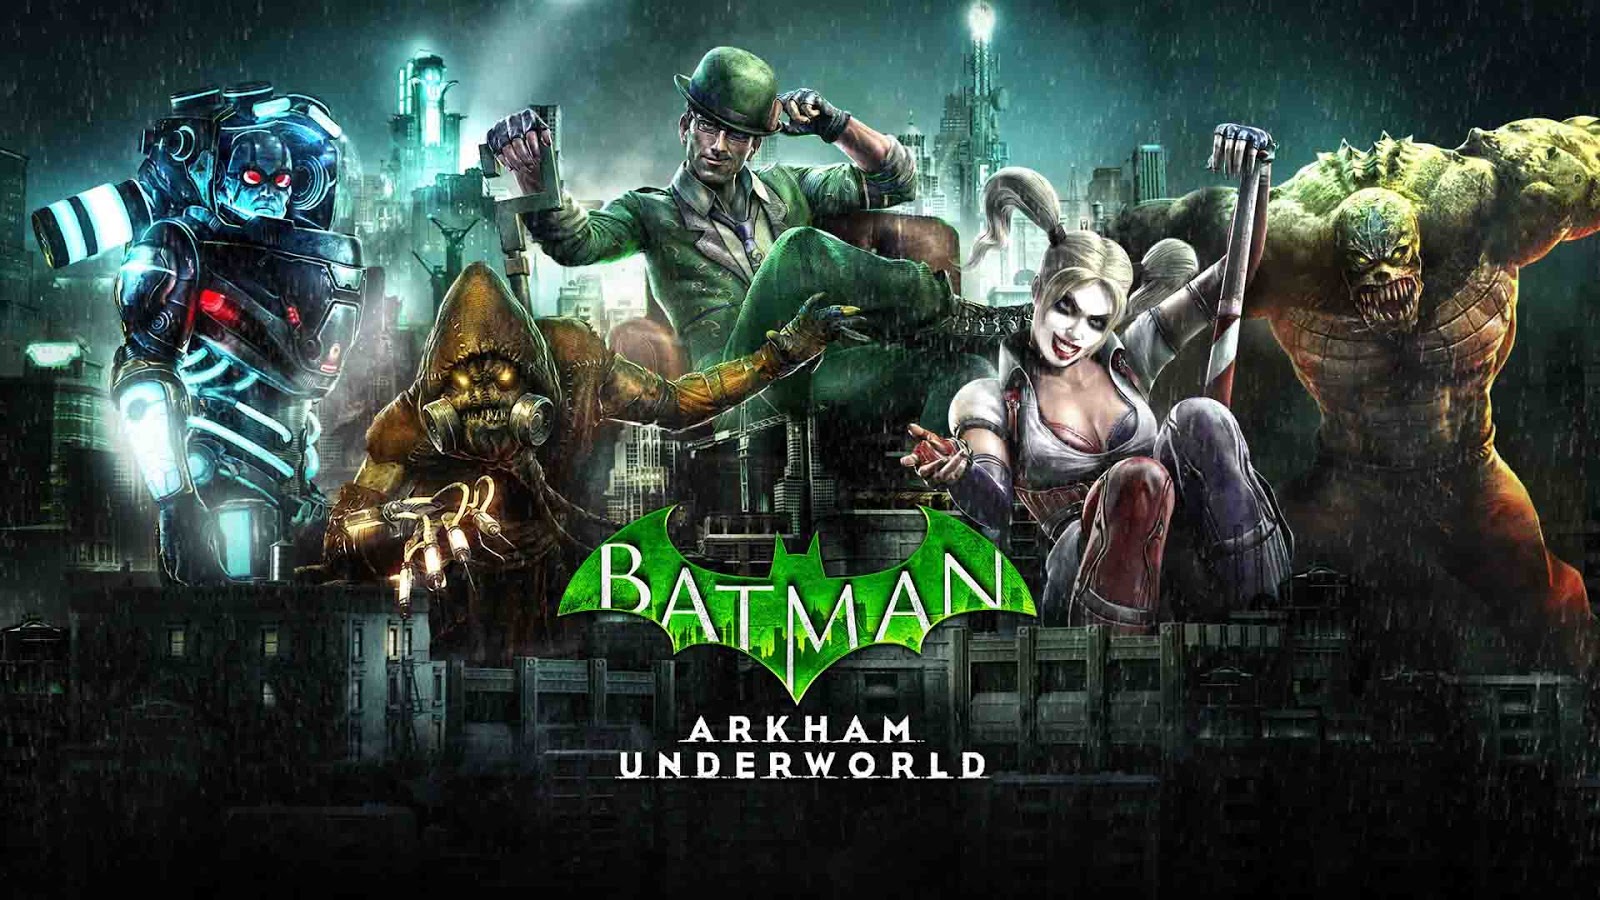 Batman: Arkham Underworld  APK + OBB DATA - Android Original  Game Review